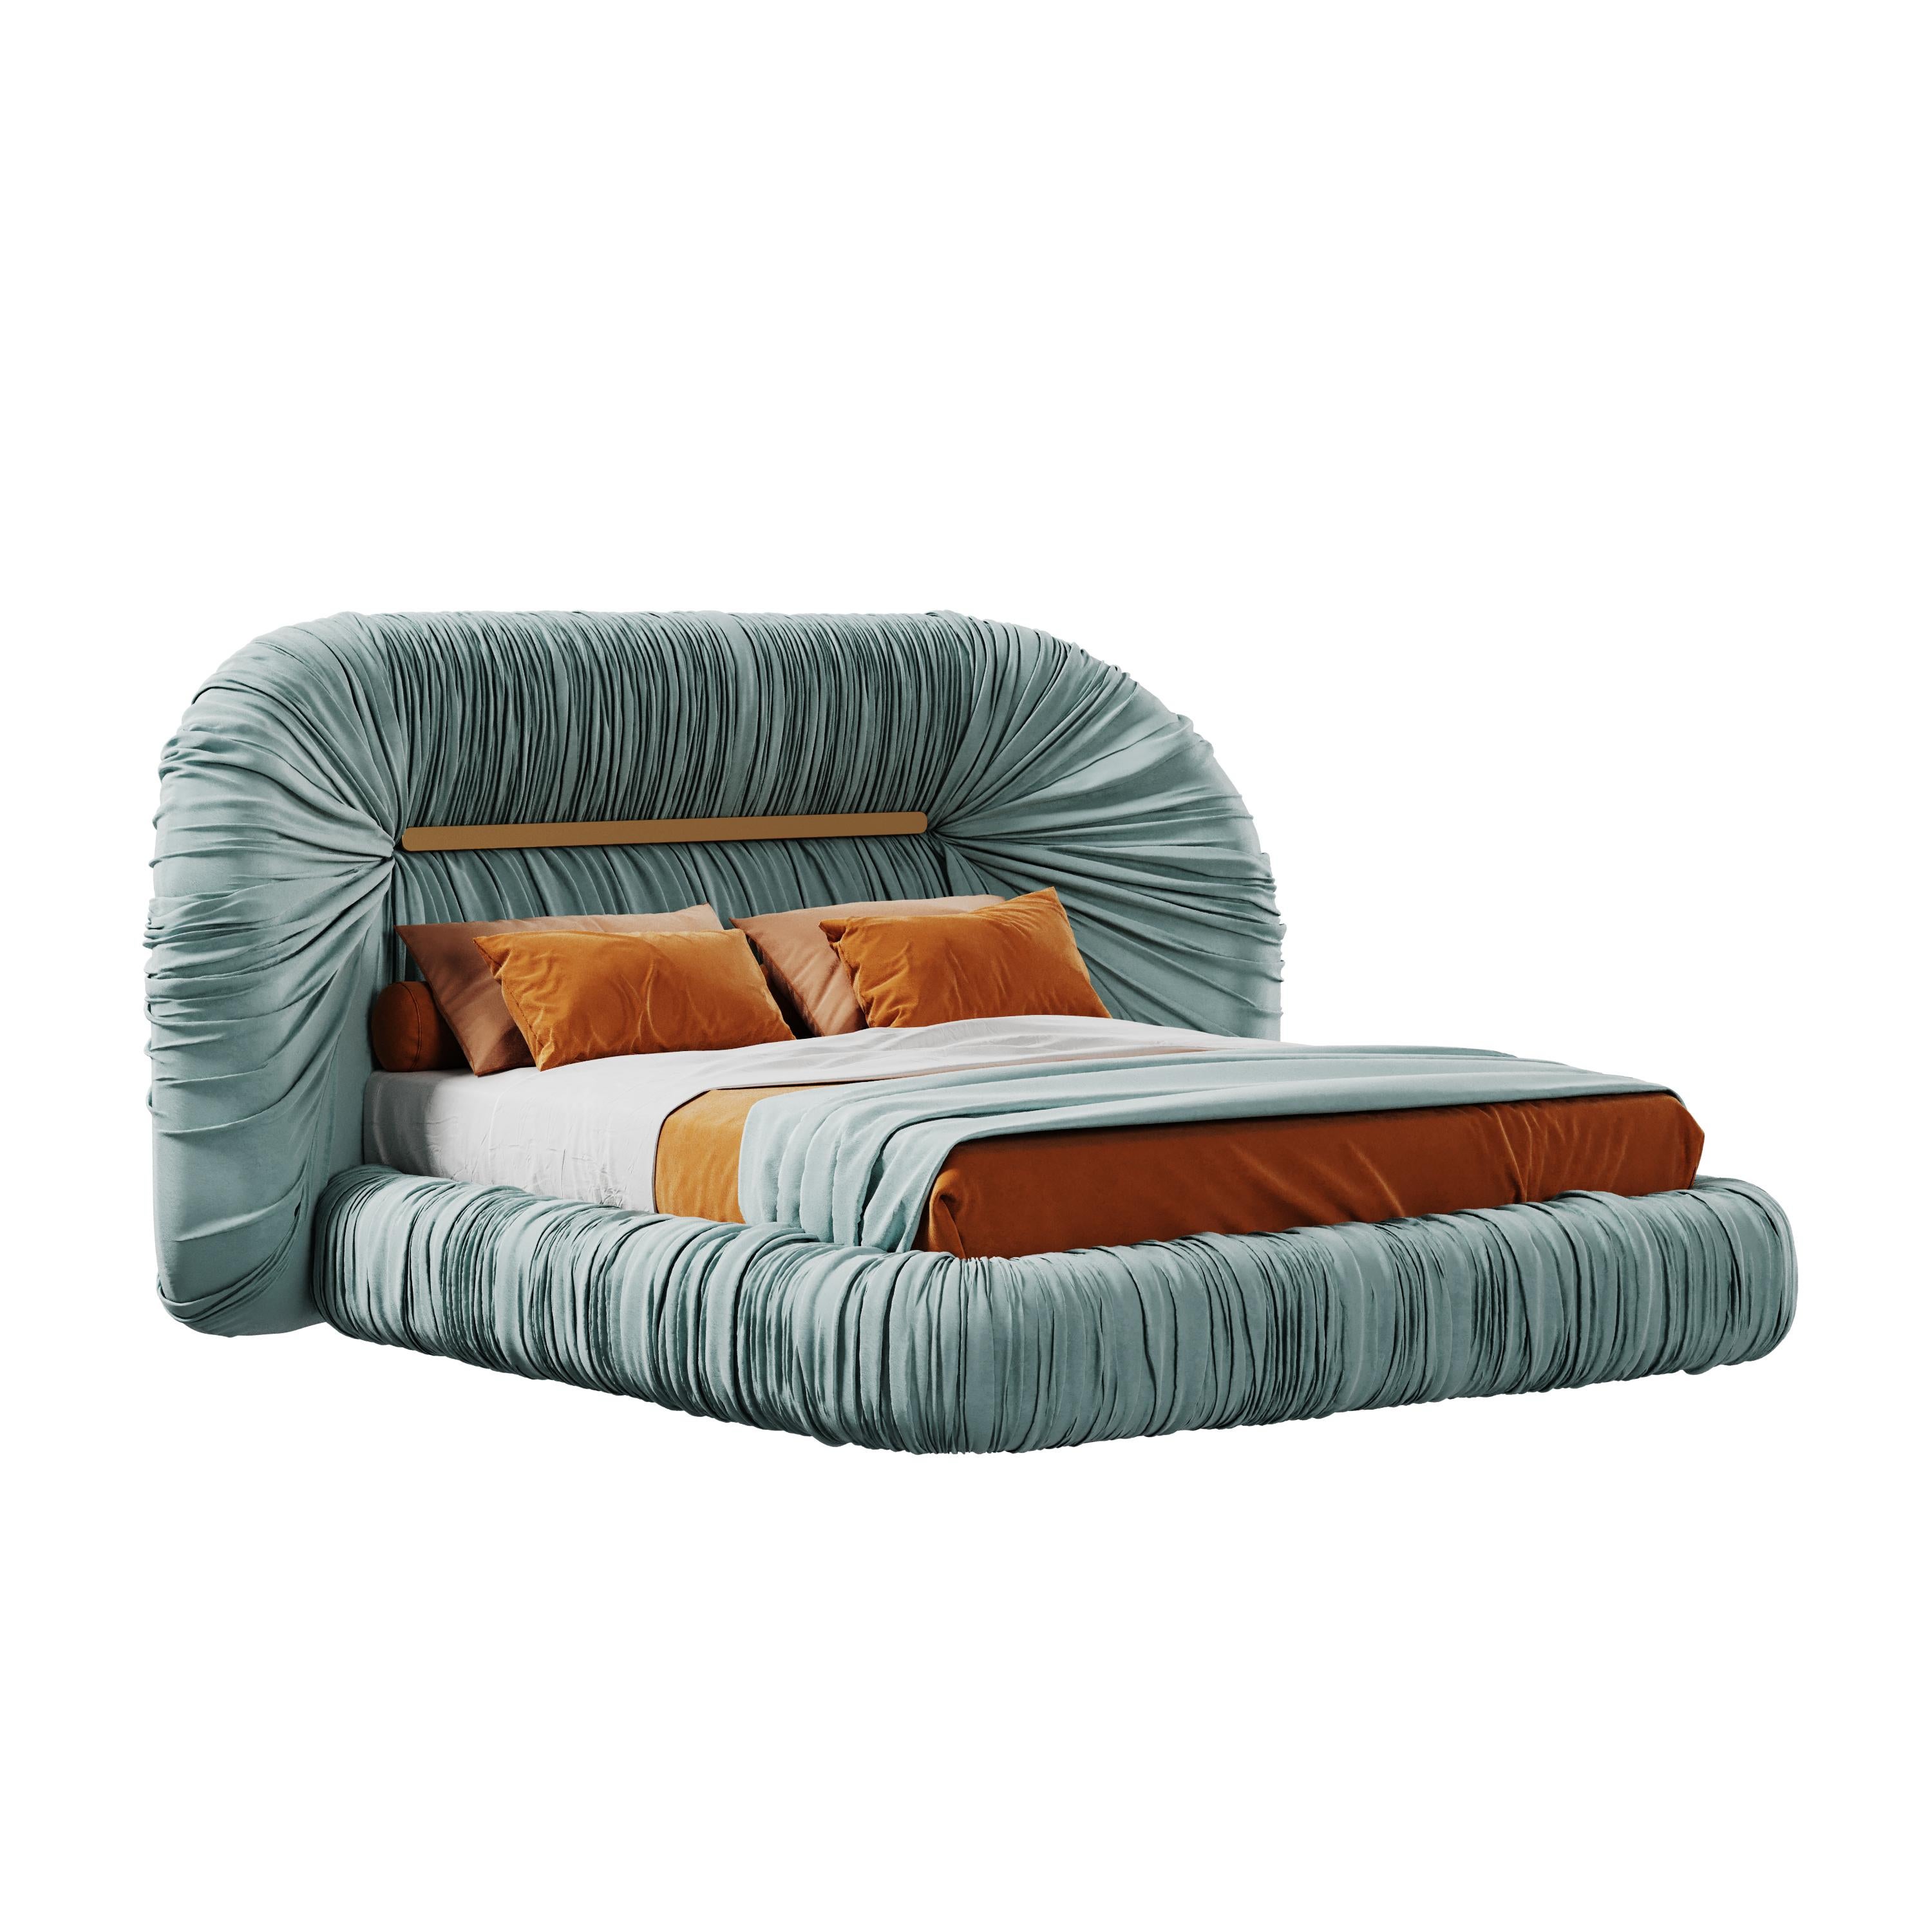 Contemporary Mid-Century Modern-Inspired Tammi Bed Velvet by Ottiu For Sale